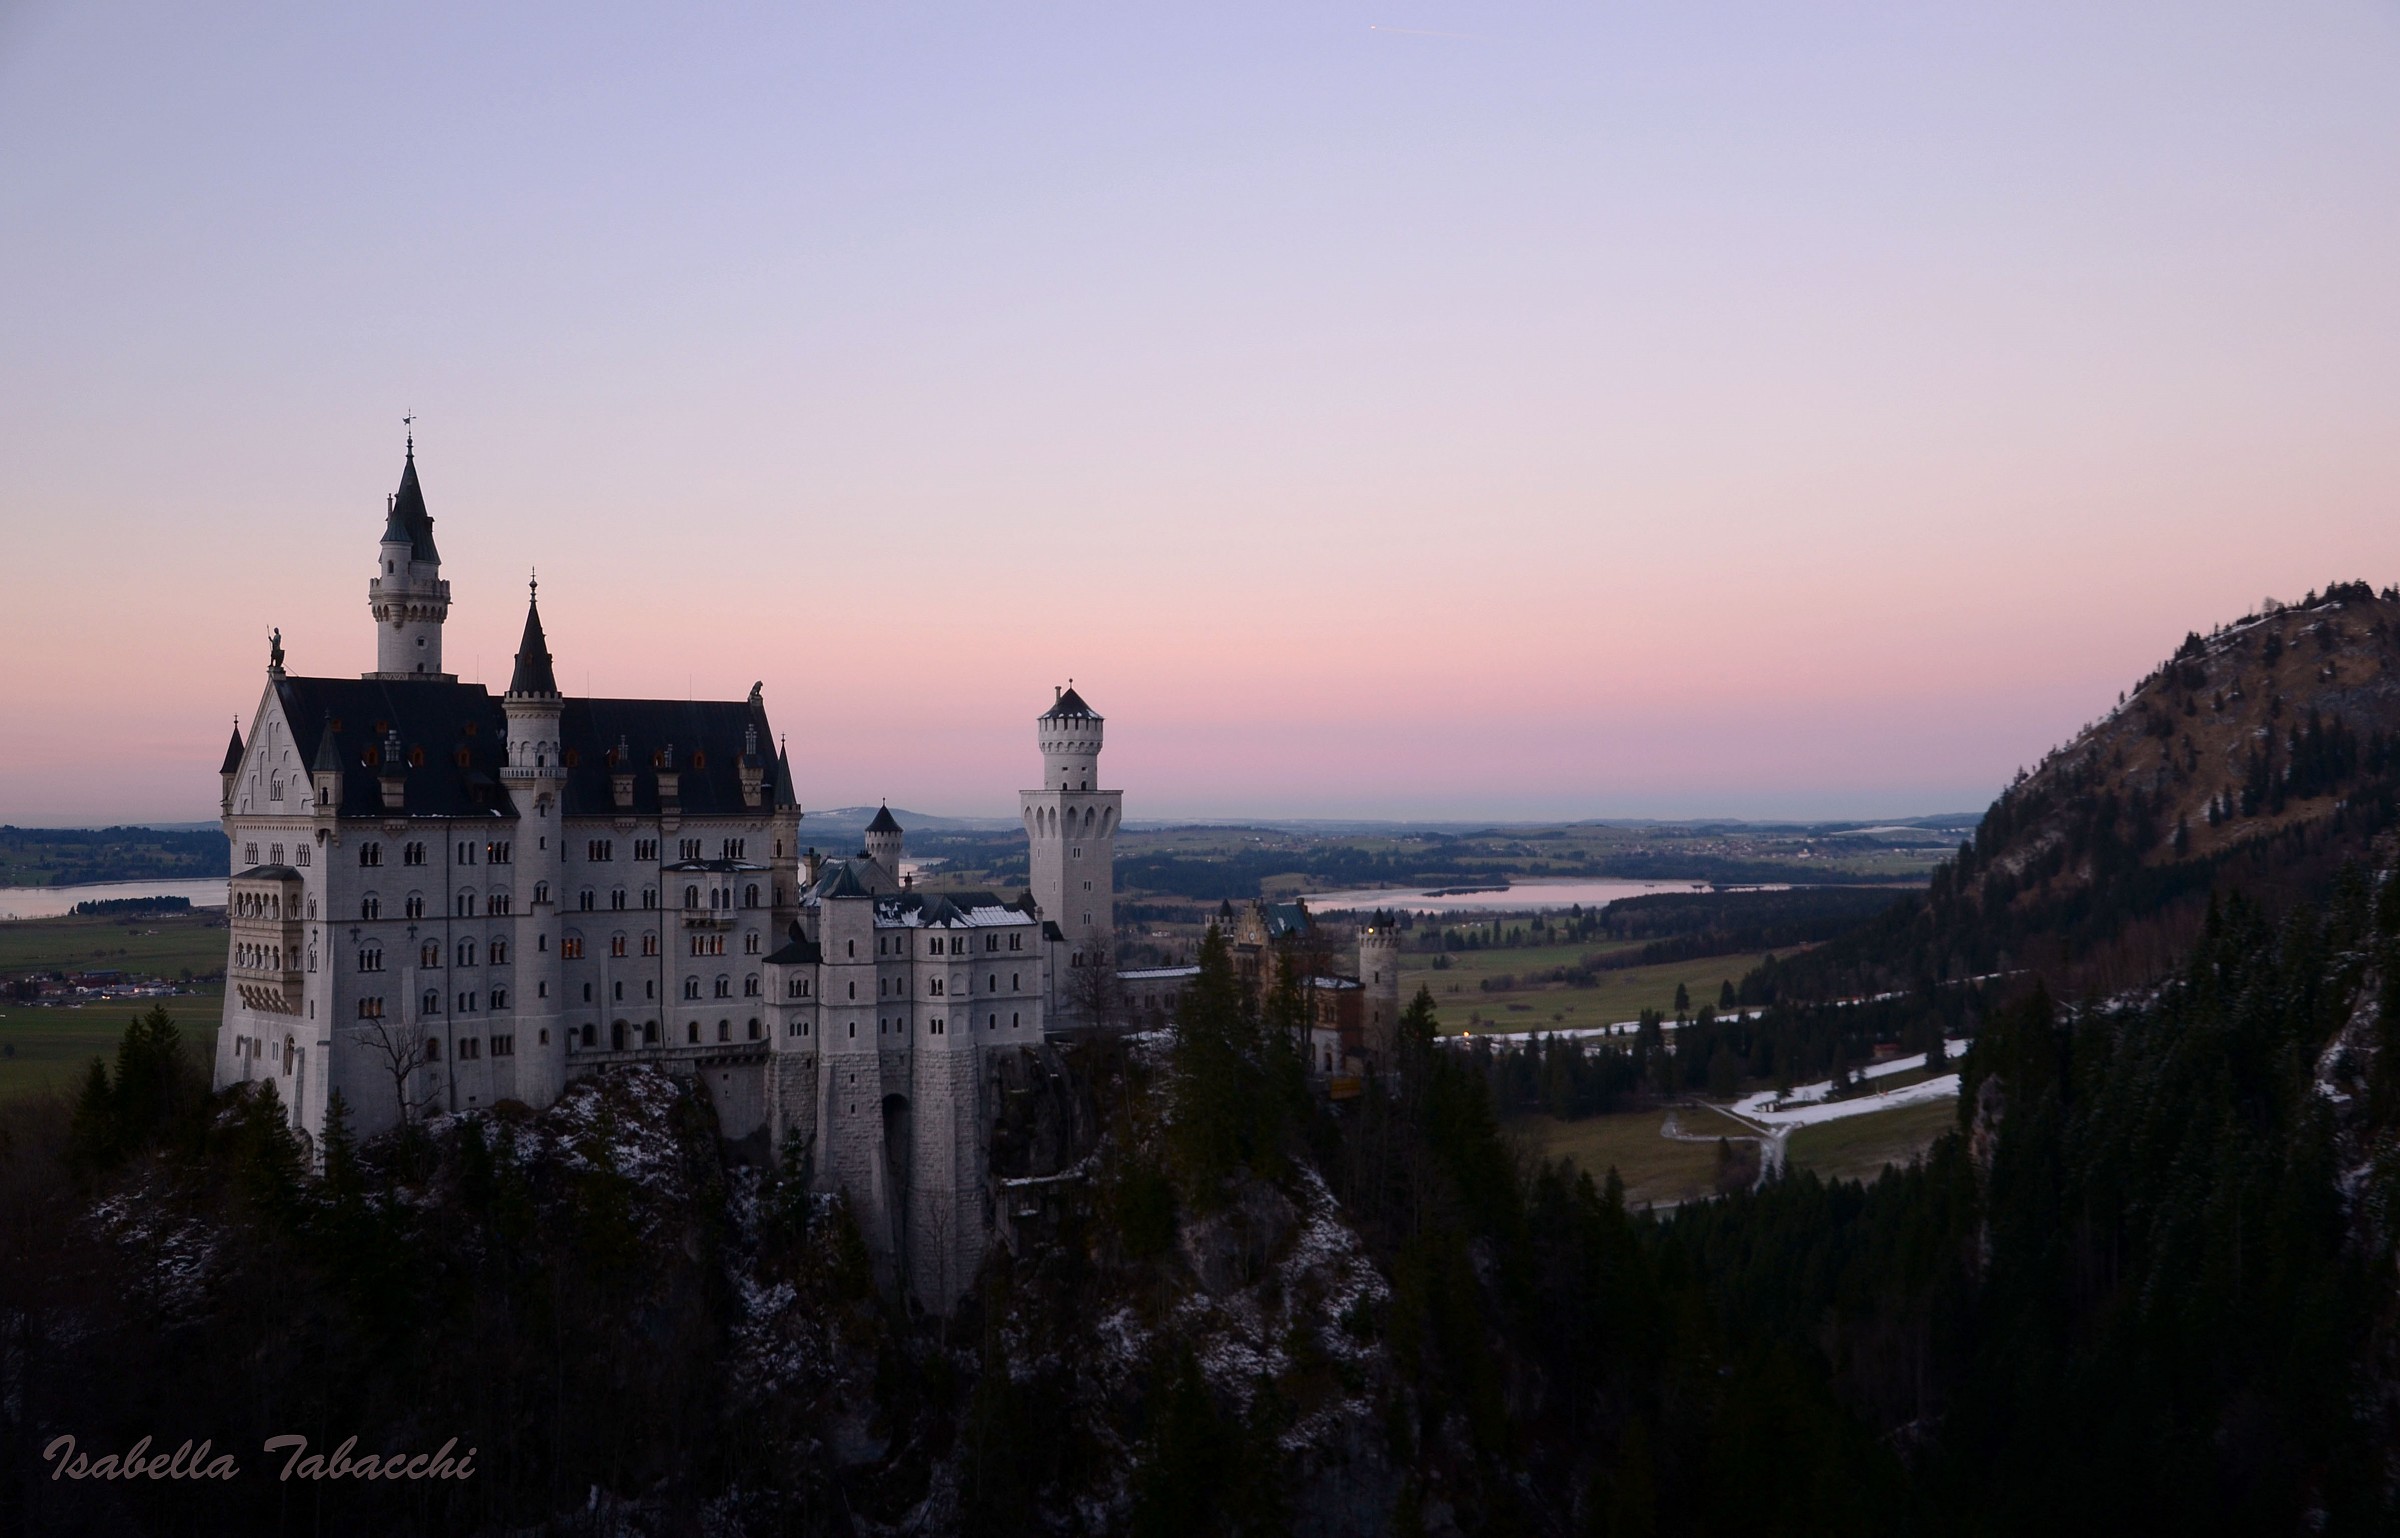 The Neuschwanstein castle after sunset...